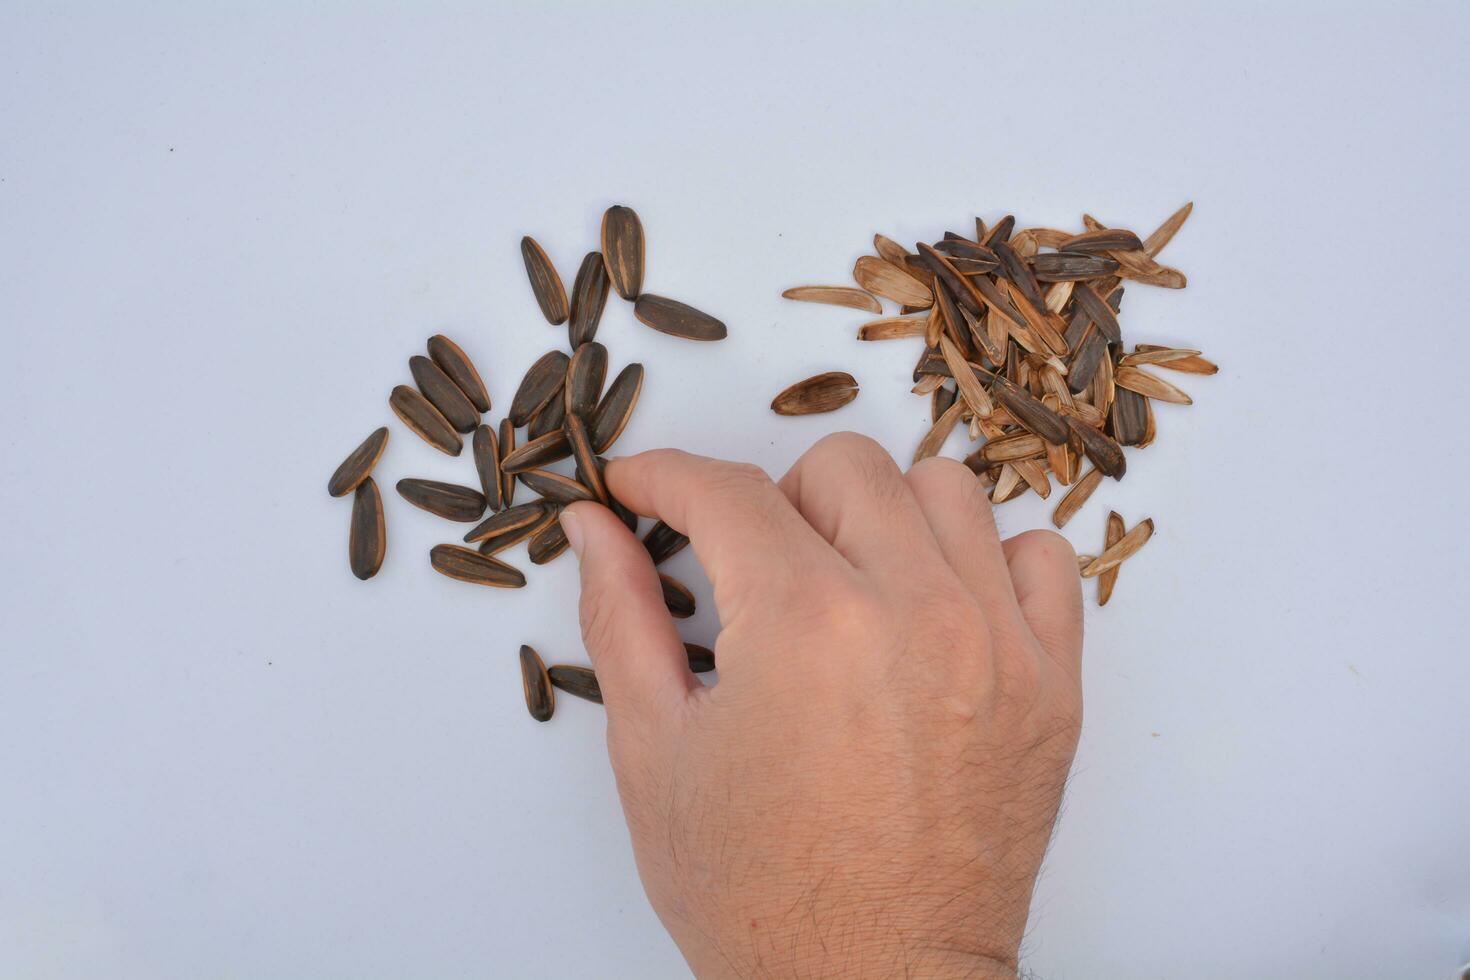 girassol sementes e Concha depois de comendo, isolar, branco fundo foto